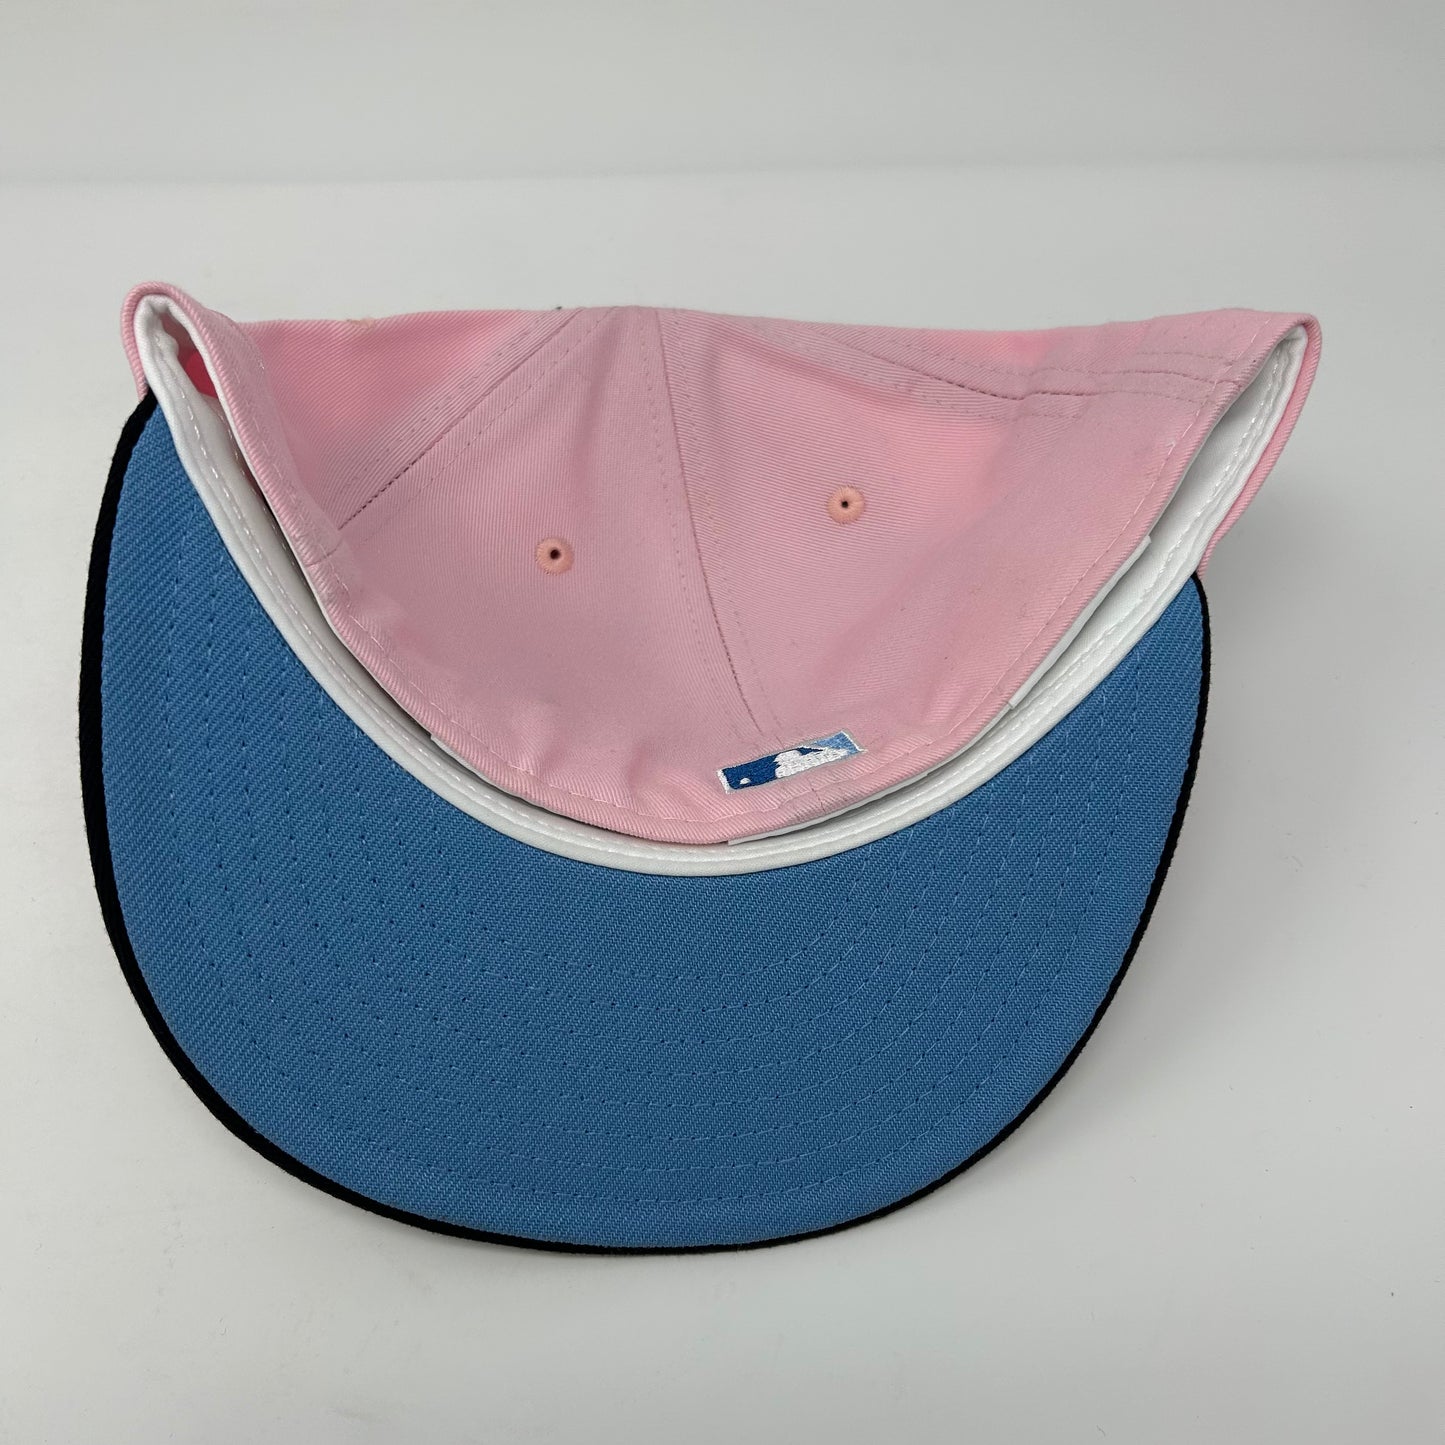 Houston Astros “Pink/Navy Star” Hat